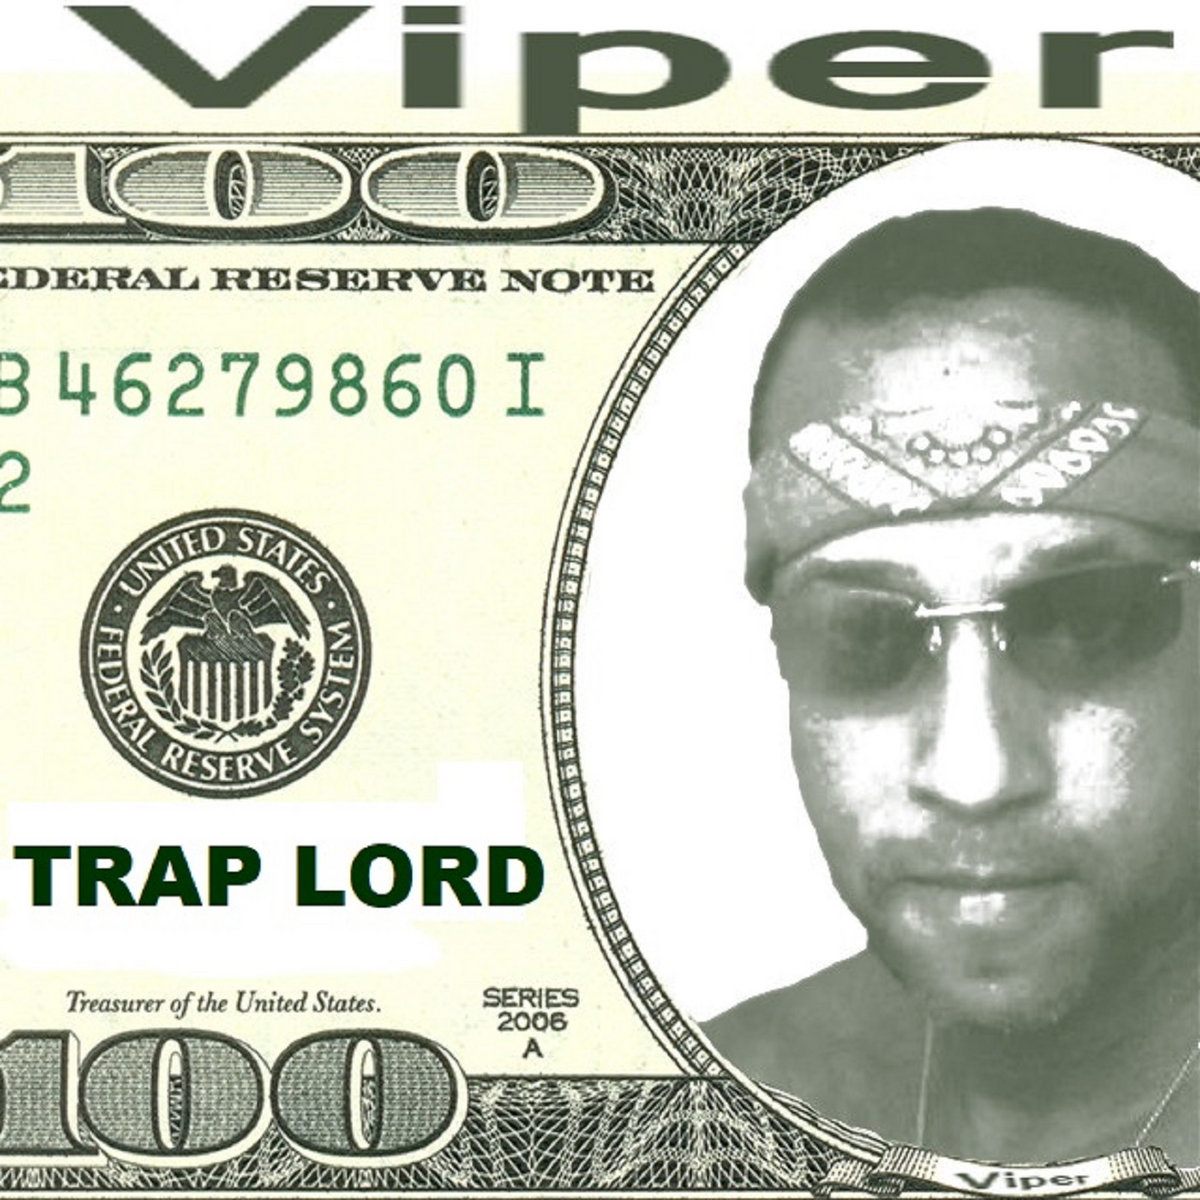 trap lord album download